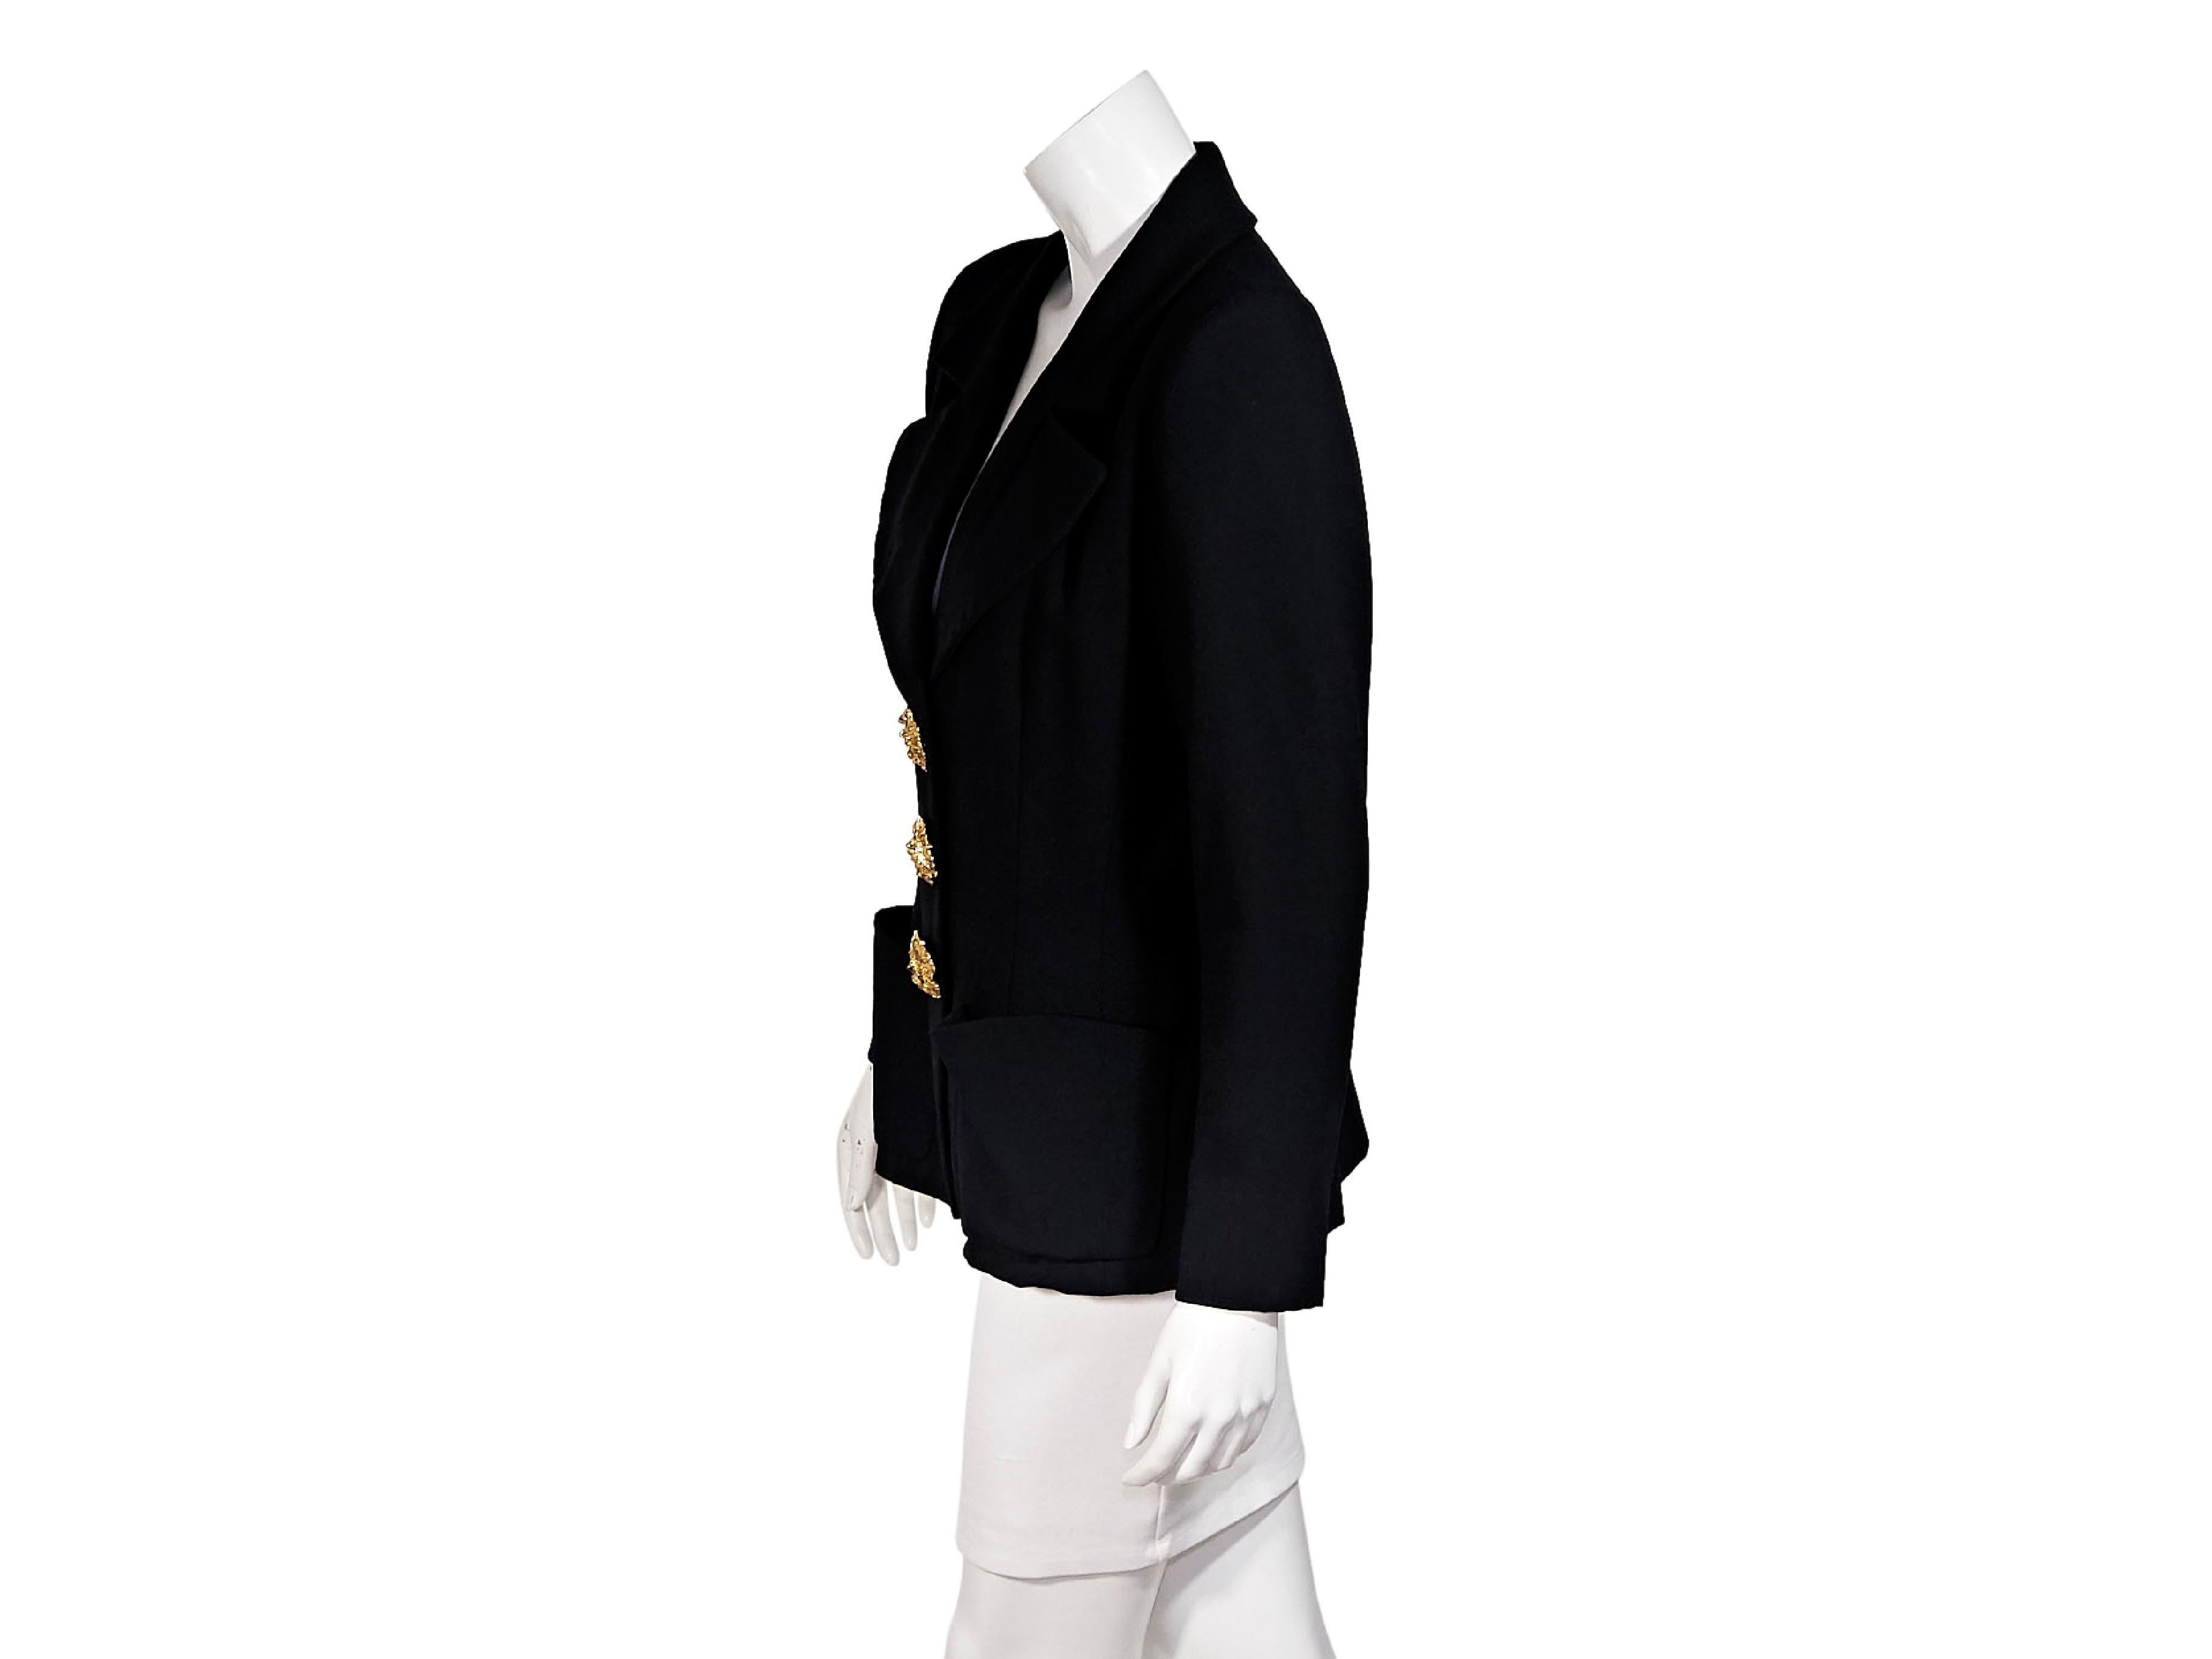 Product details:  Black wool blazer by Yves Saint Laurent Rive Gauche.  Notched lapel.  Long sleeves.  Button-front closure.  Waist patch pockets.  Goldtone hardware.  Label size FR 42.  36